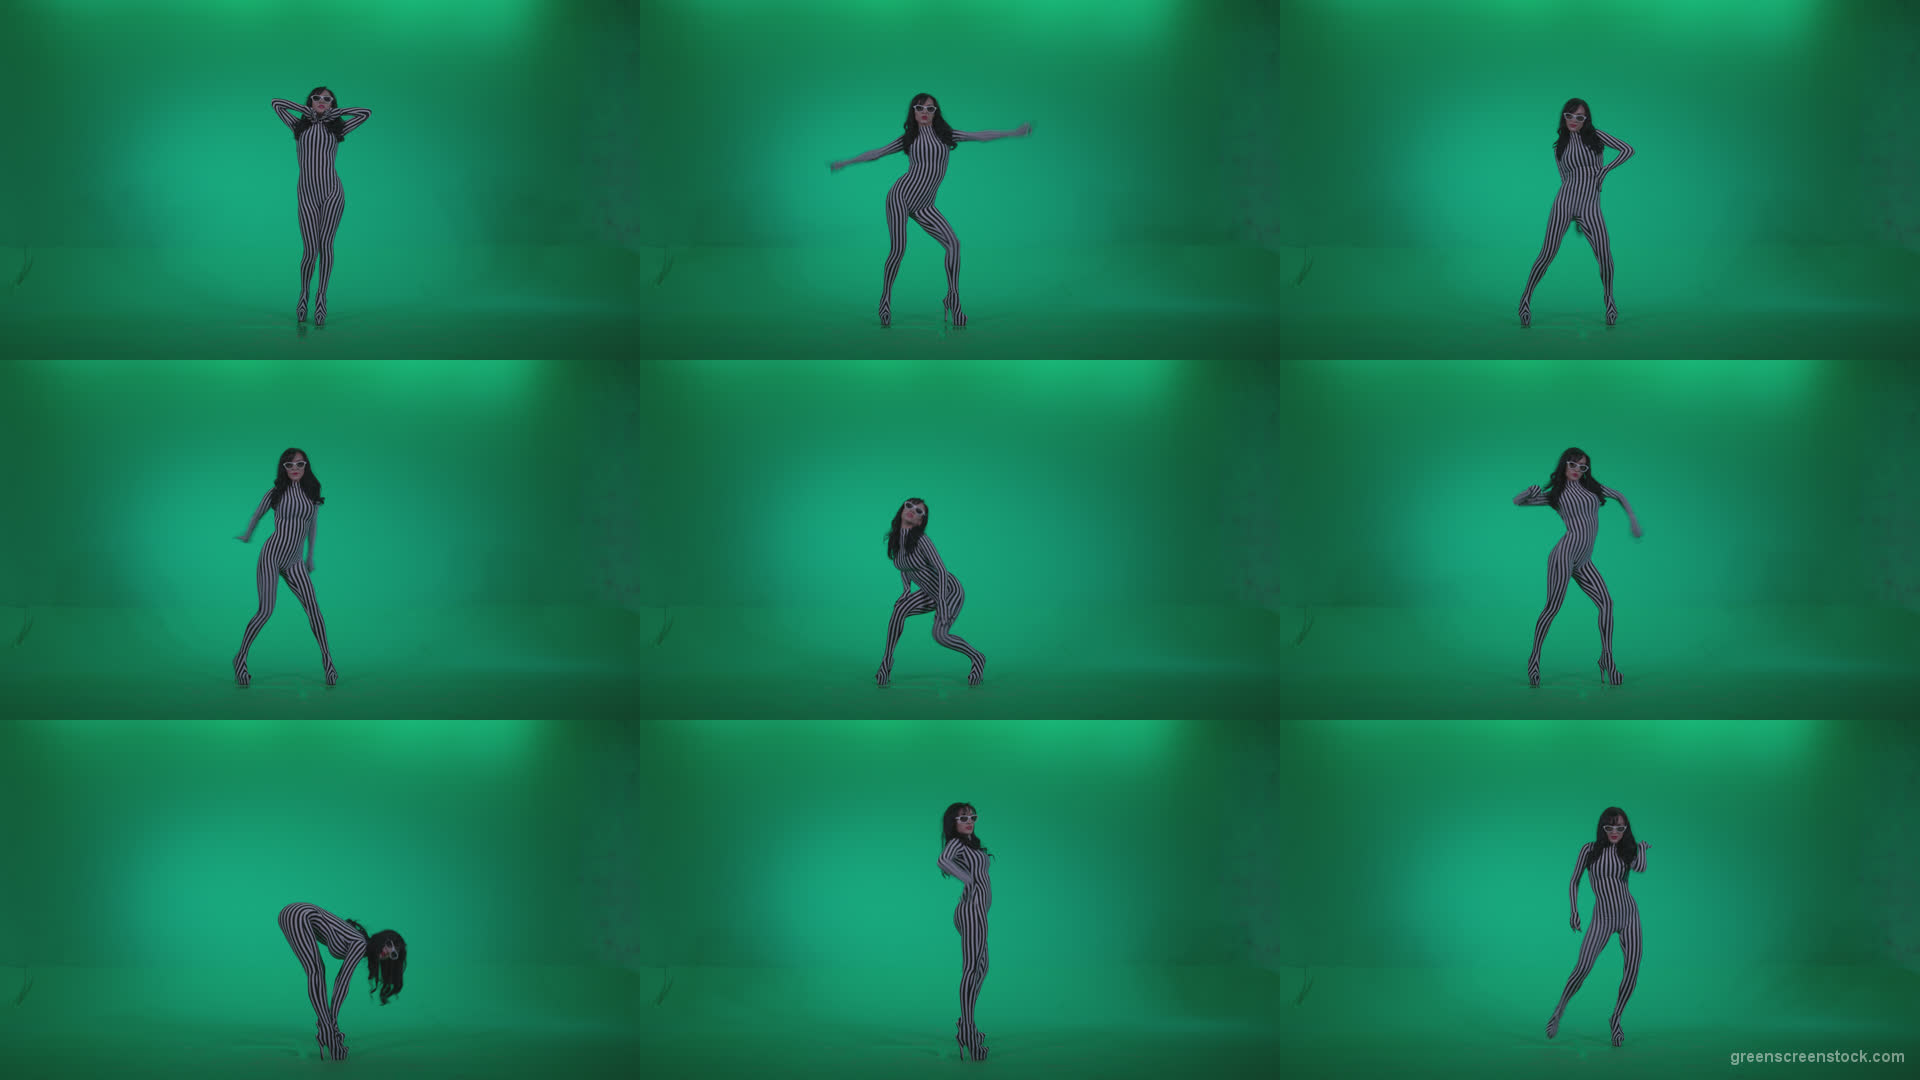 Go-go-Dancer-White-Stripes-s7-Green-Screen-Video-Footage Green Screen Stock